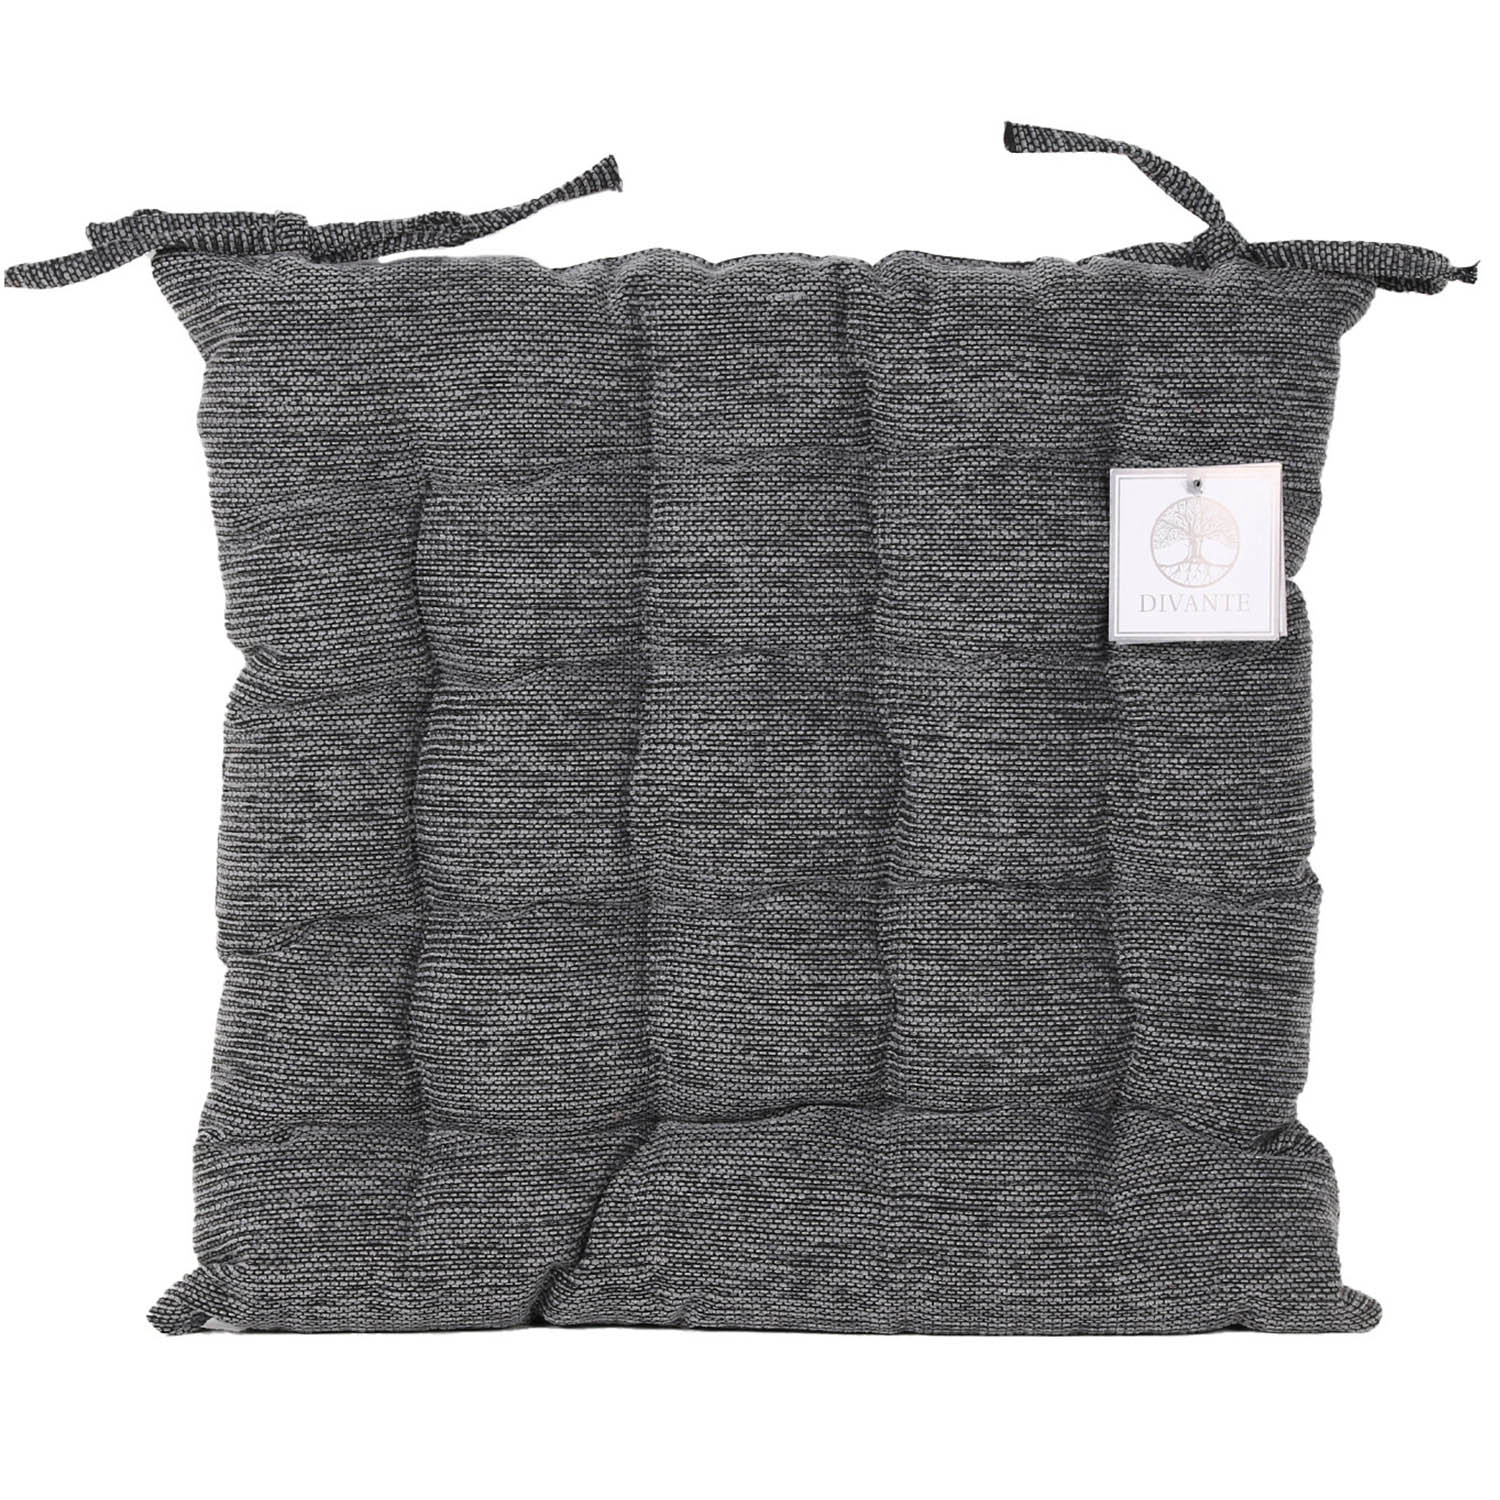 Divante Chenille Grey Weave Seat Pad 40 x 40cm Image